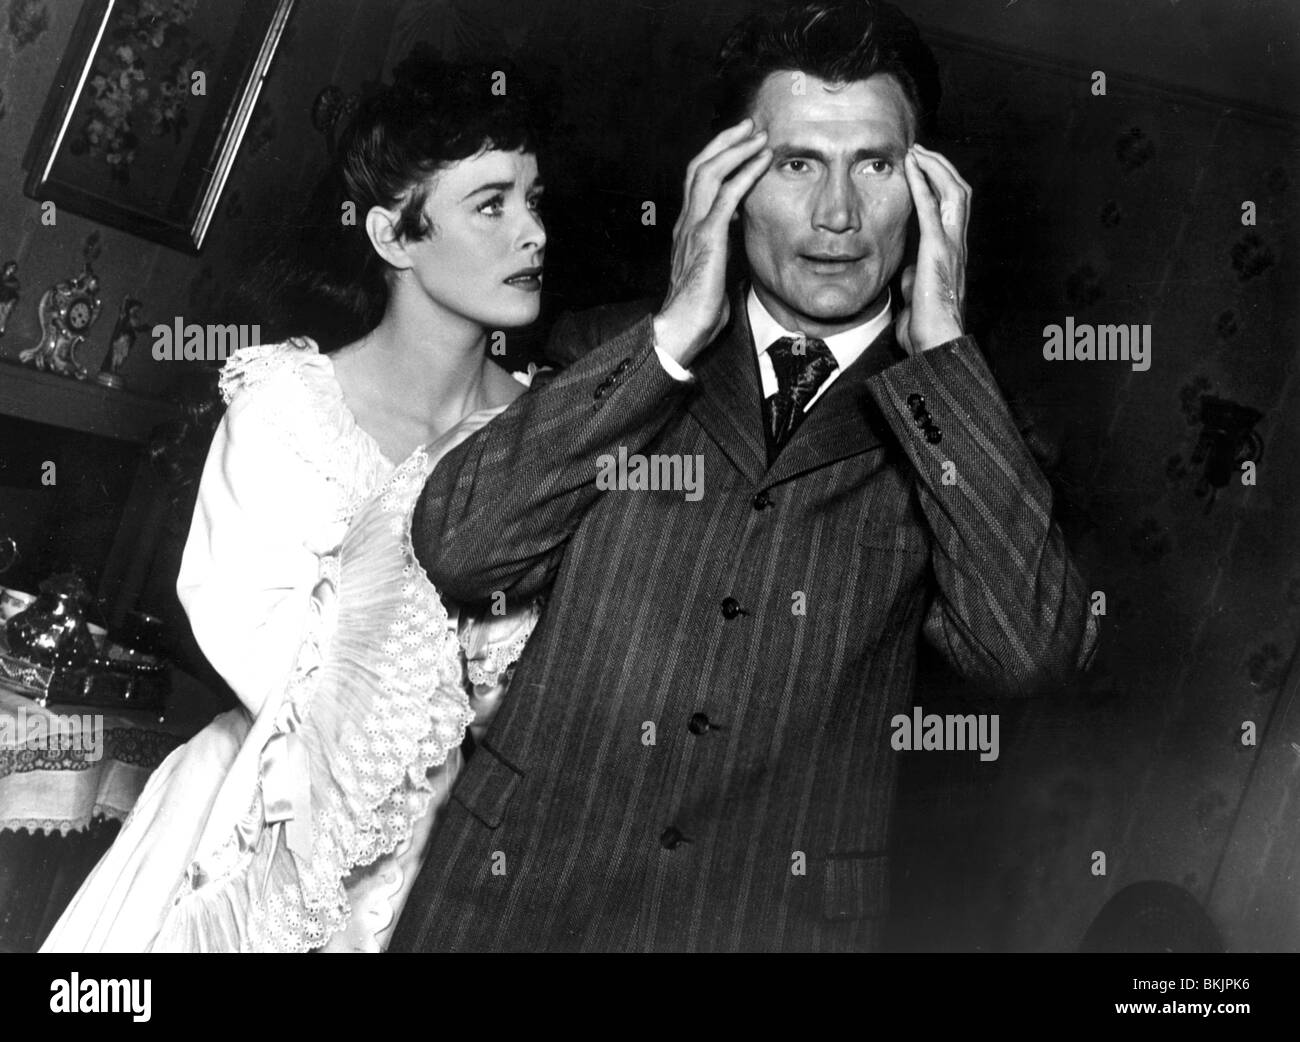 MAN IN THE ATTIC (1953) CONSTANCE SMITH, JACK PALANCE MATC 001P Stock Photo